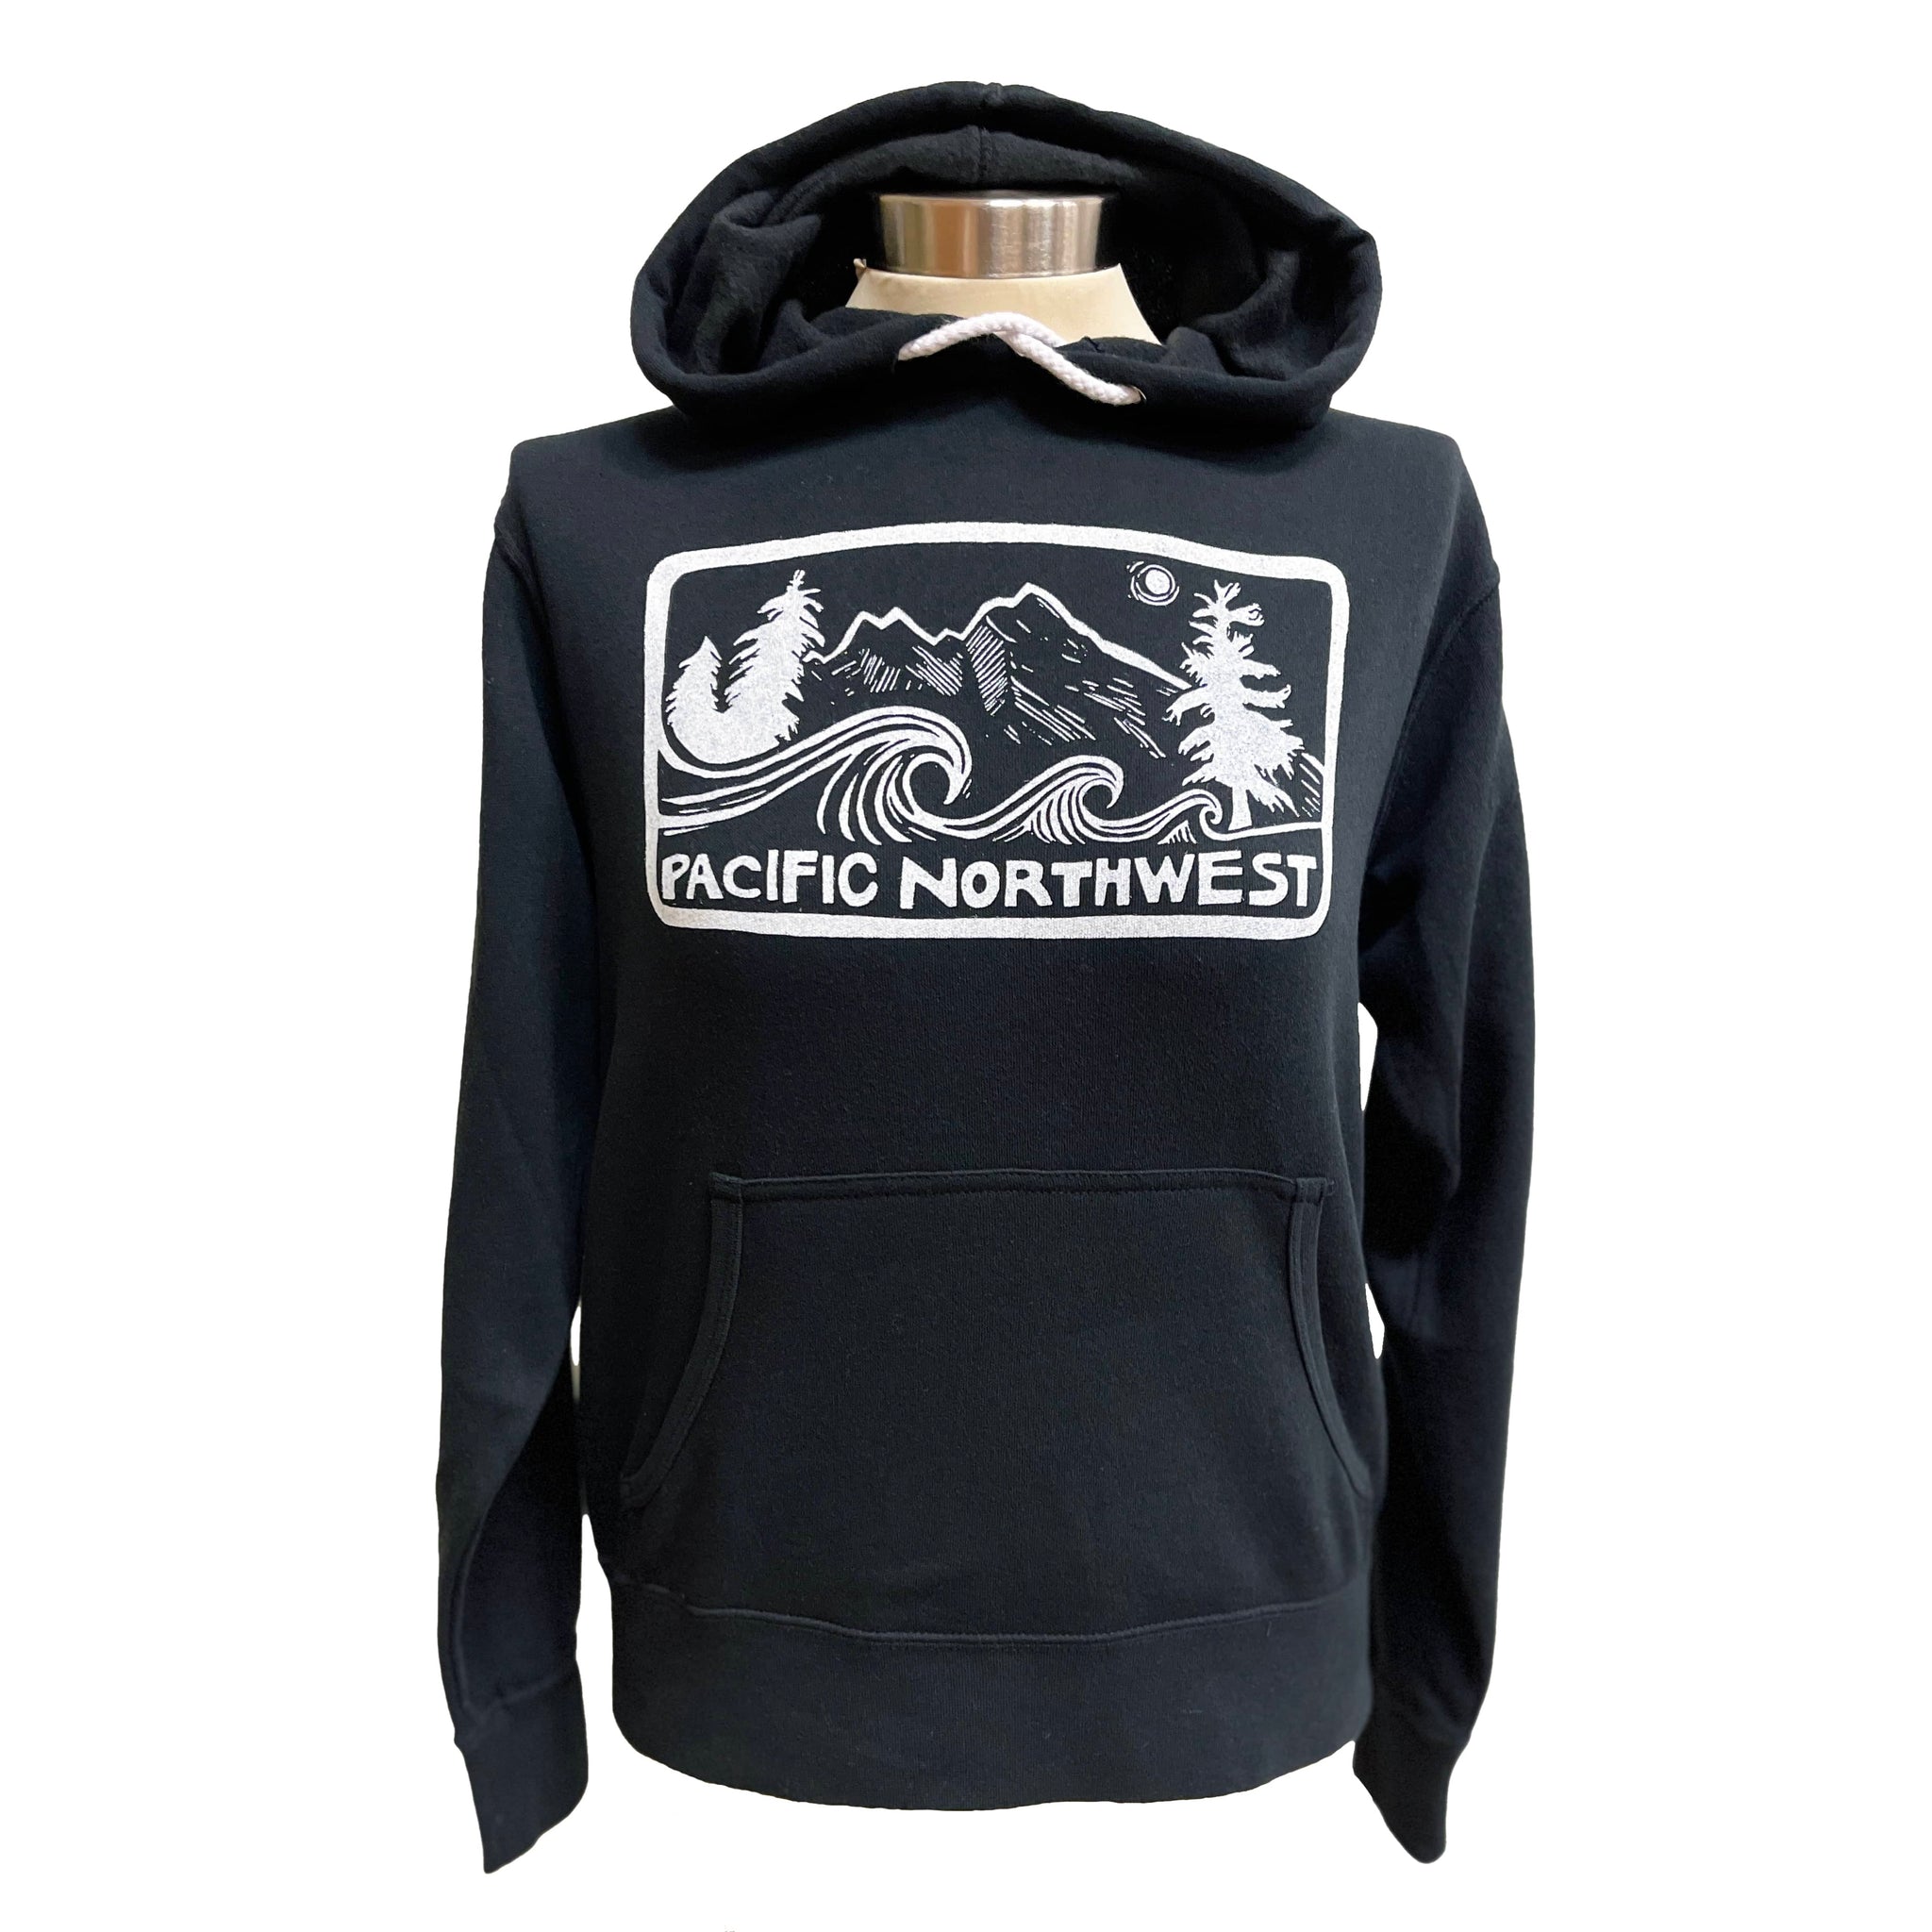 Pacific Northwest 2.0 Unisex Pullover Hoodie in Black